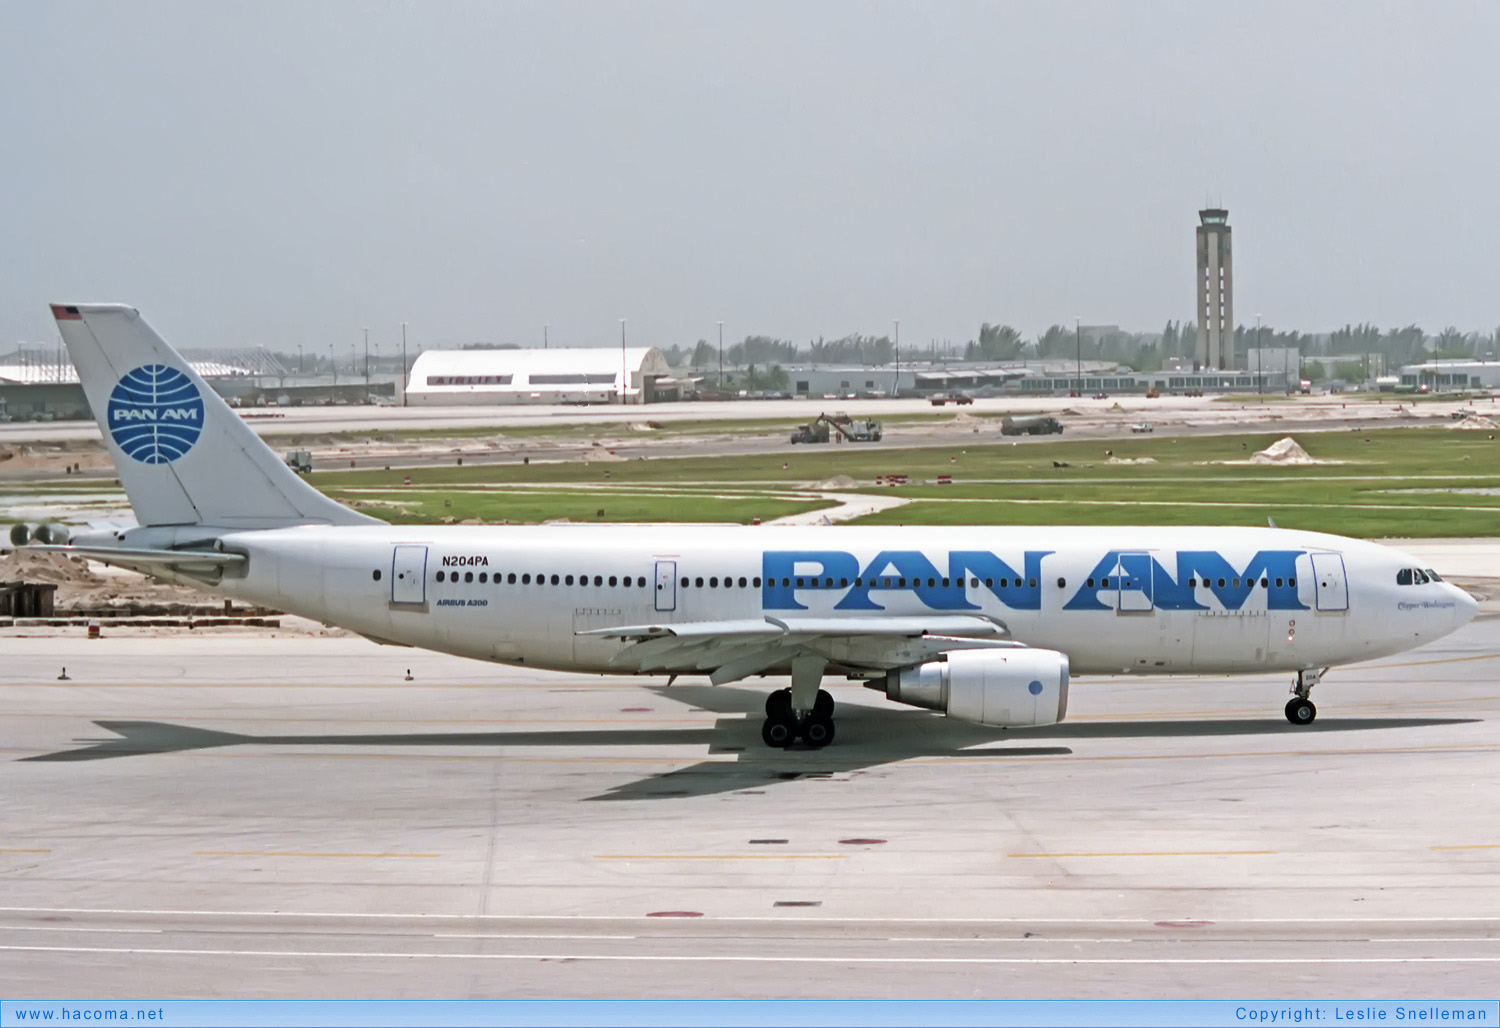 Photo of N204PA - Pan Am Clipper Washington / Costa Rica - Miami International Airport - Apr 30, 1986